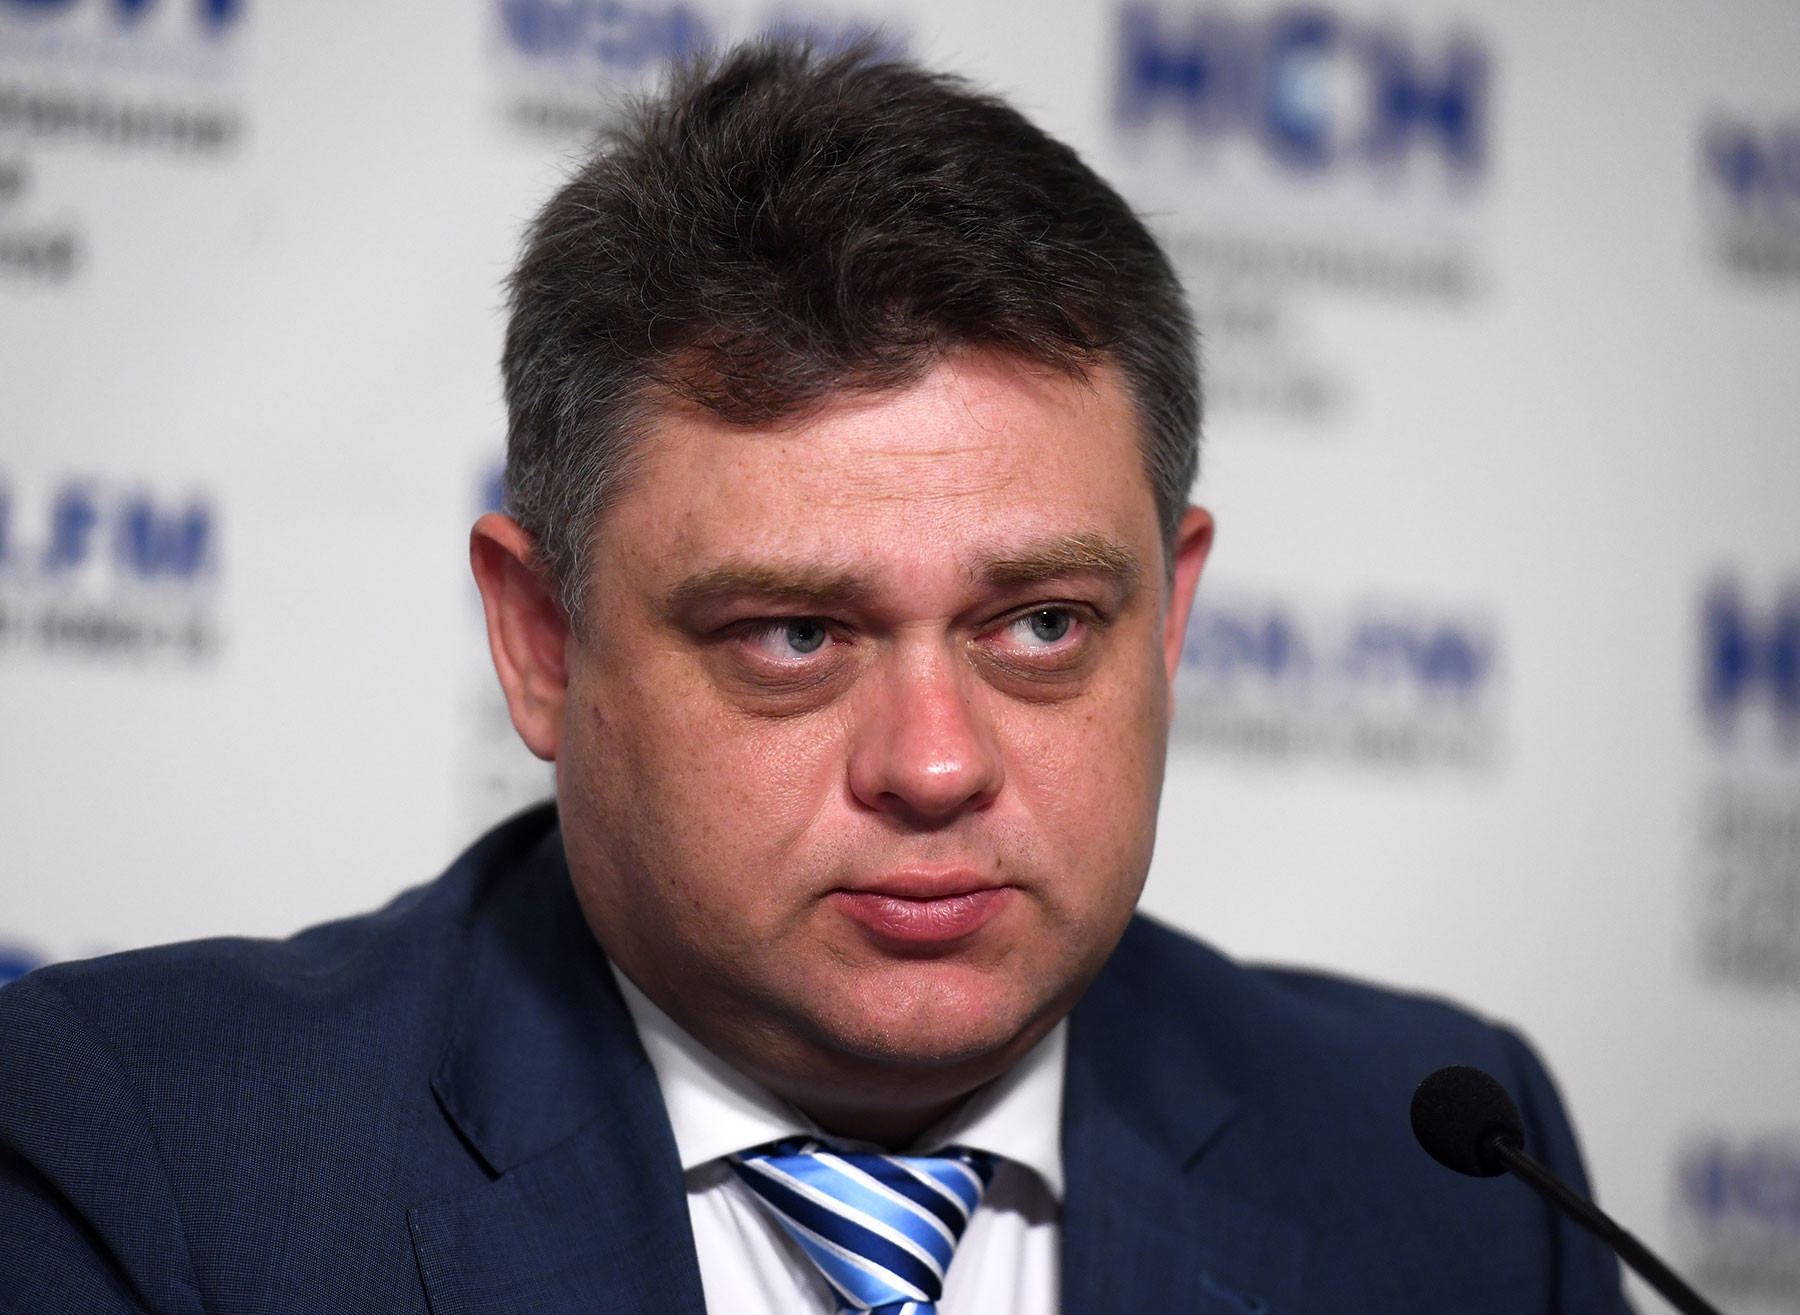 Адвокат Ангелины Хачатурян Алексей Паршин. Фото: © РИА Новости / Евгения Новоженина